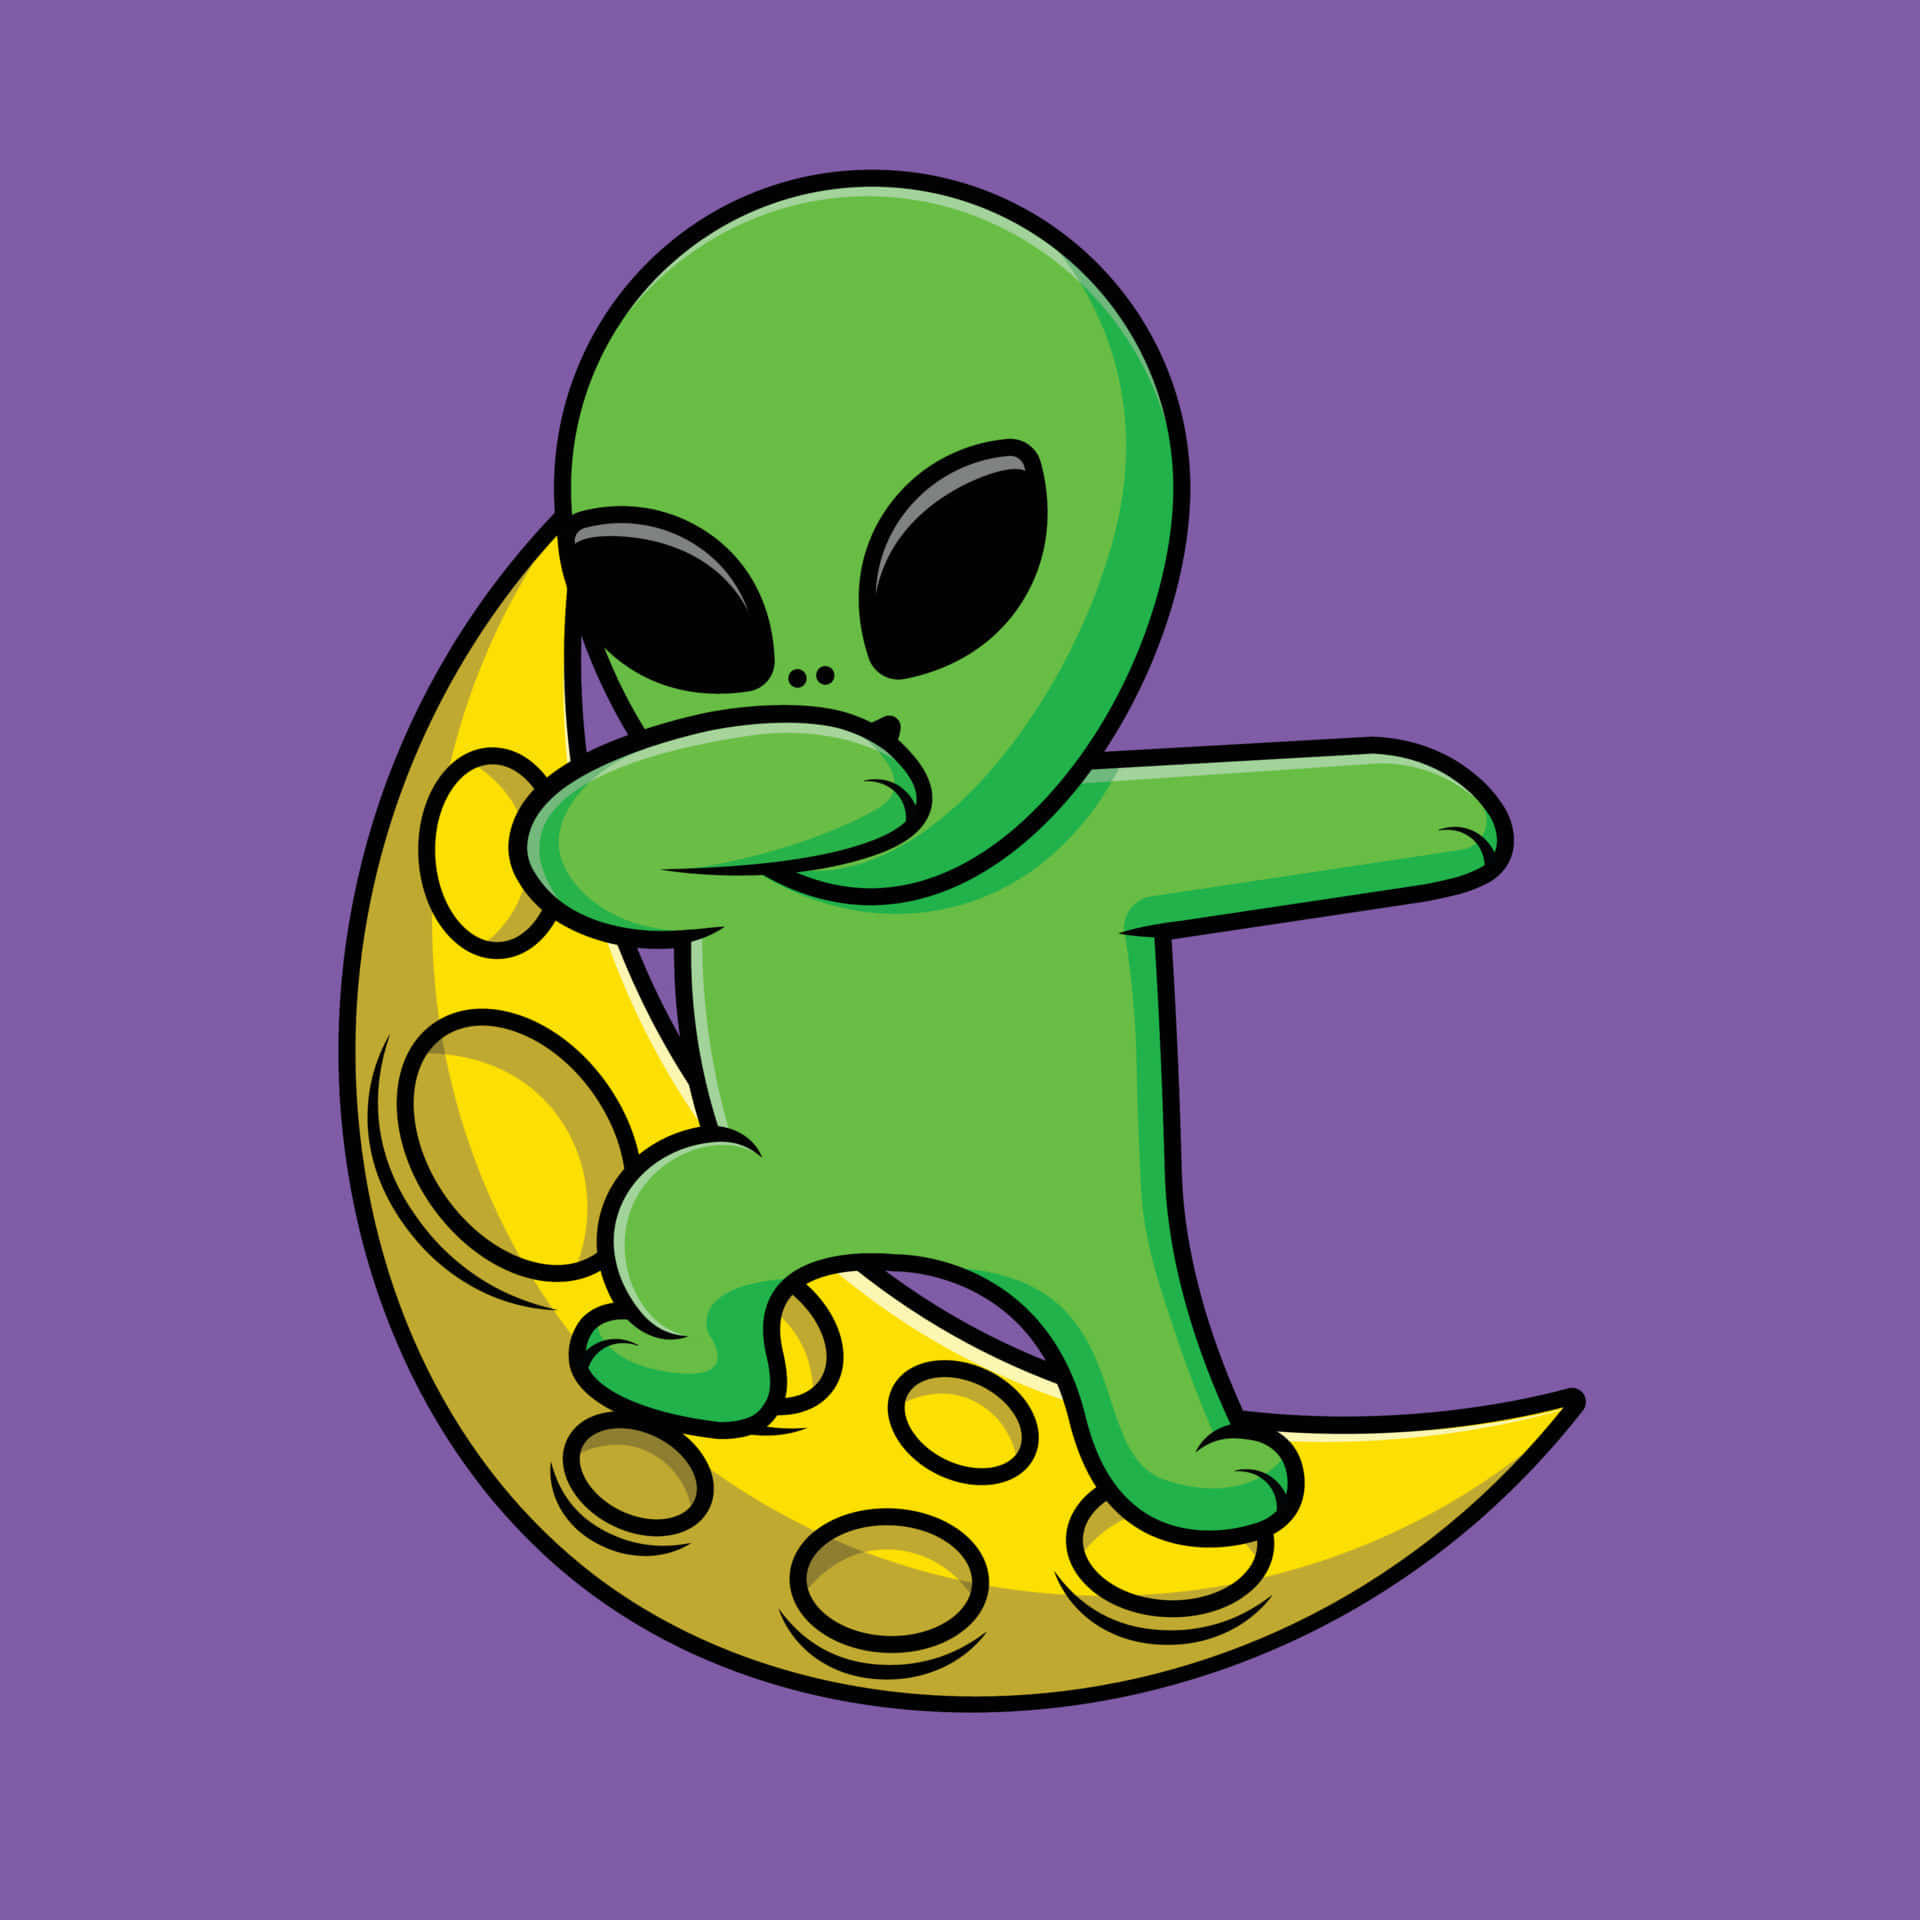 Friendly Cartoon Alien on a Mysterious Planet Wallpaper